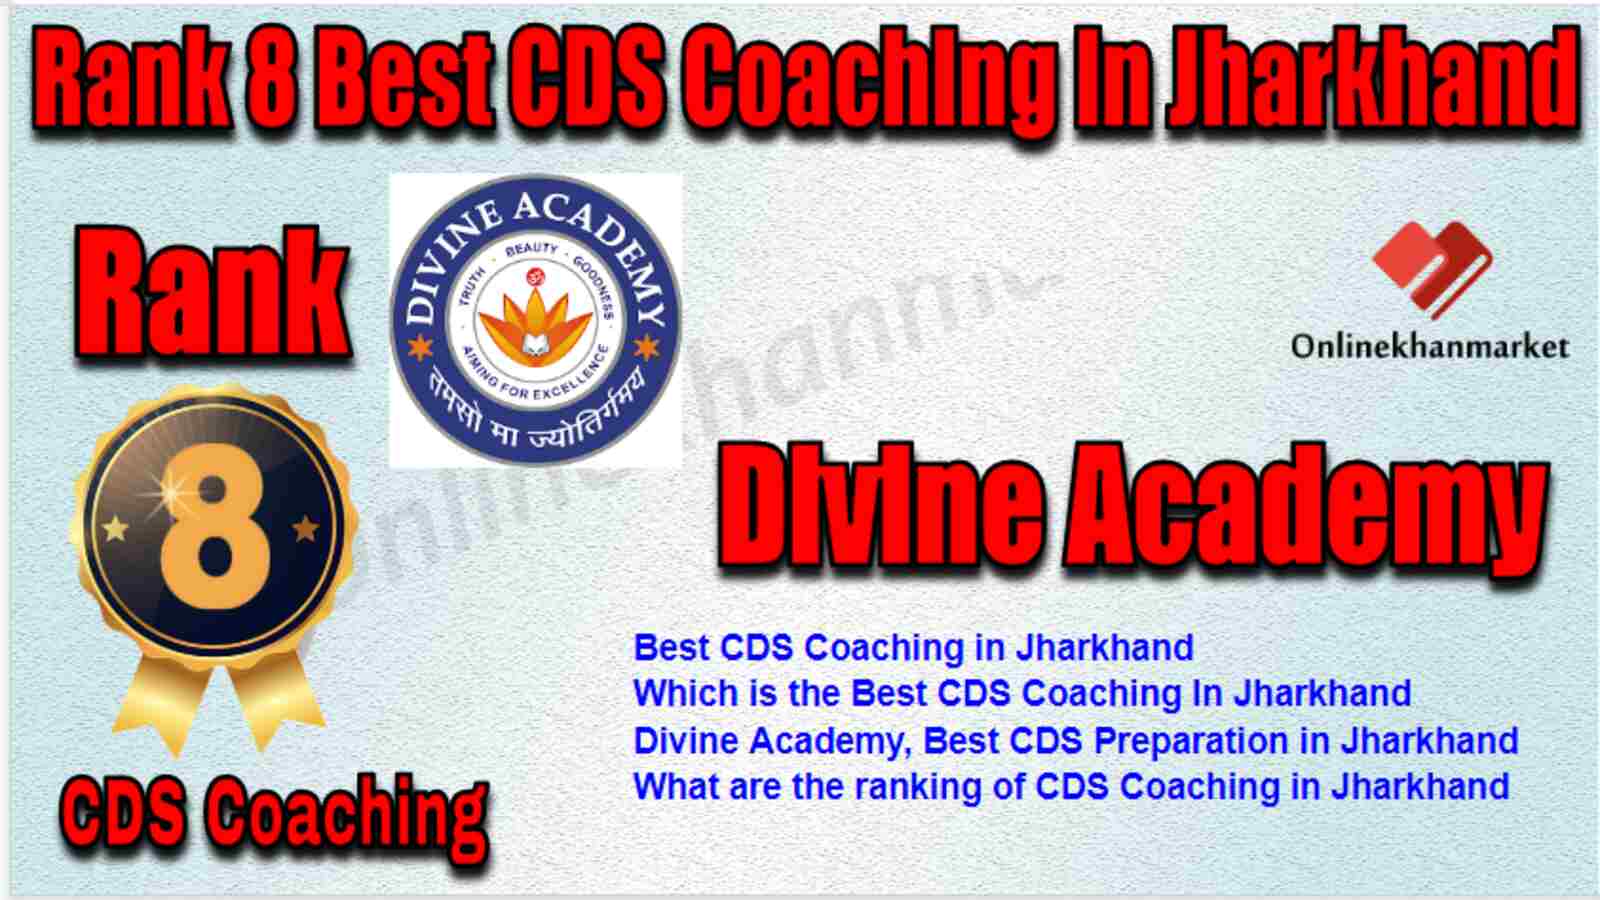 Rank 8 Best CDS Coaching in Jharkhand